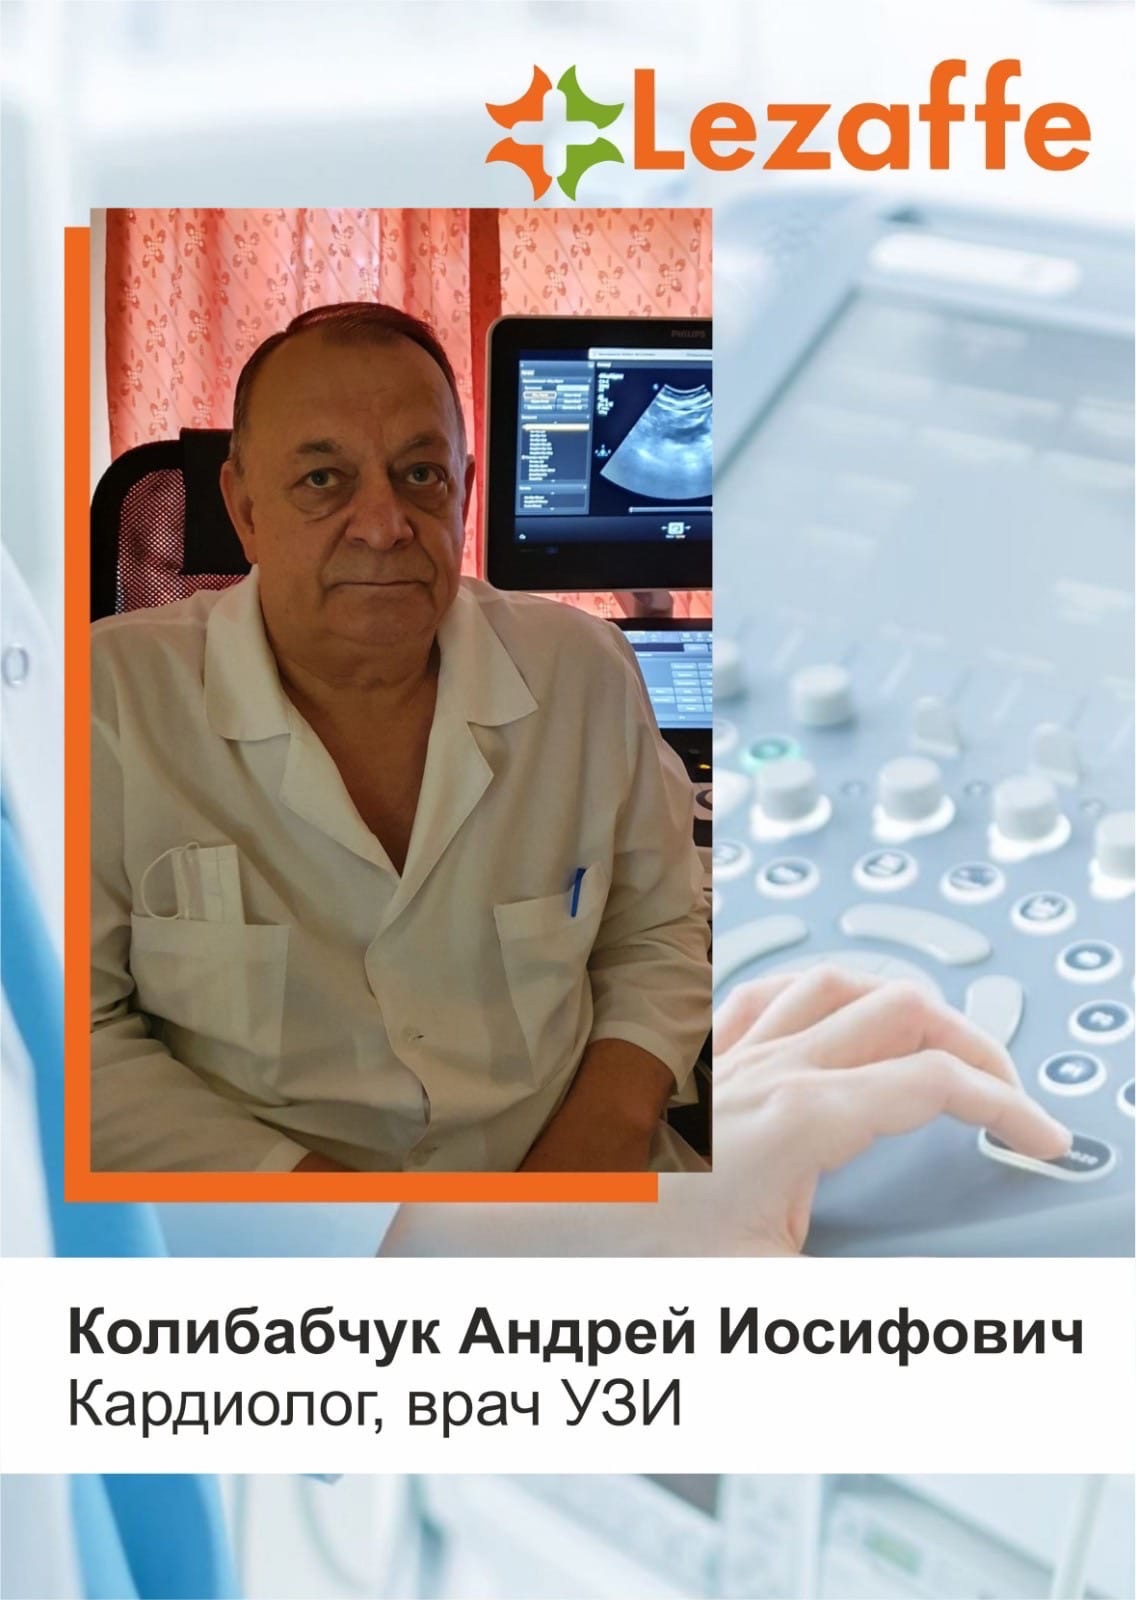 Колибабчук Андрей Иосифович - кардиолог, врач УЗИ в клинике Lezaffe г. Нягань